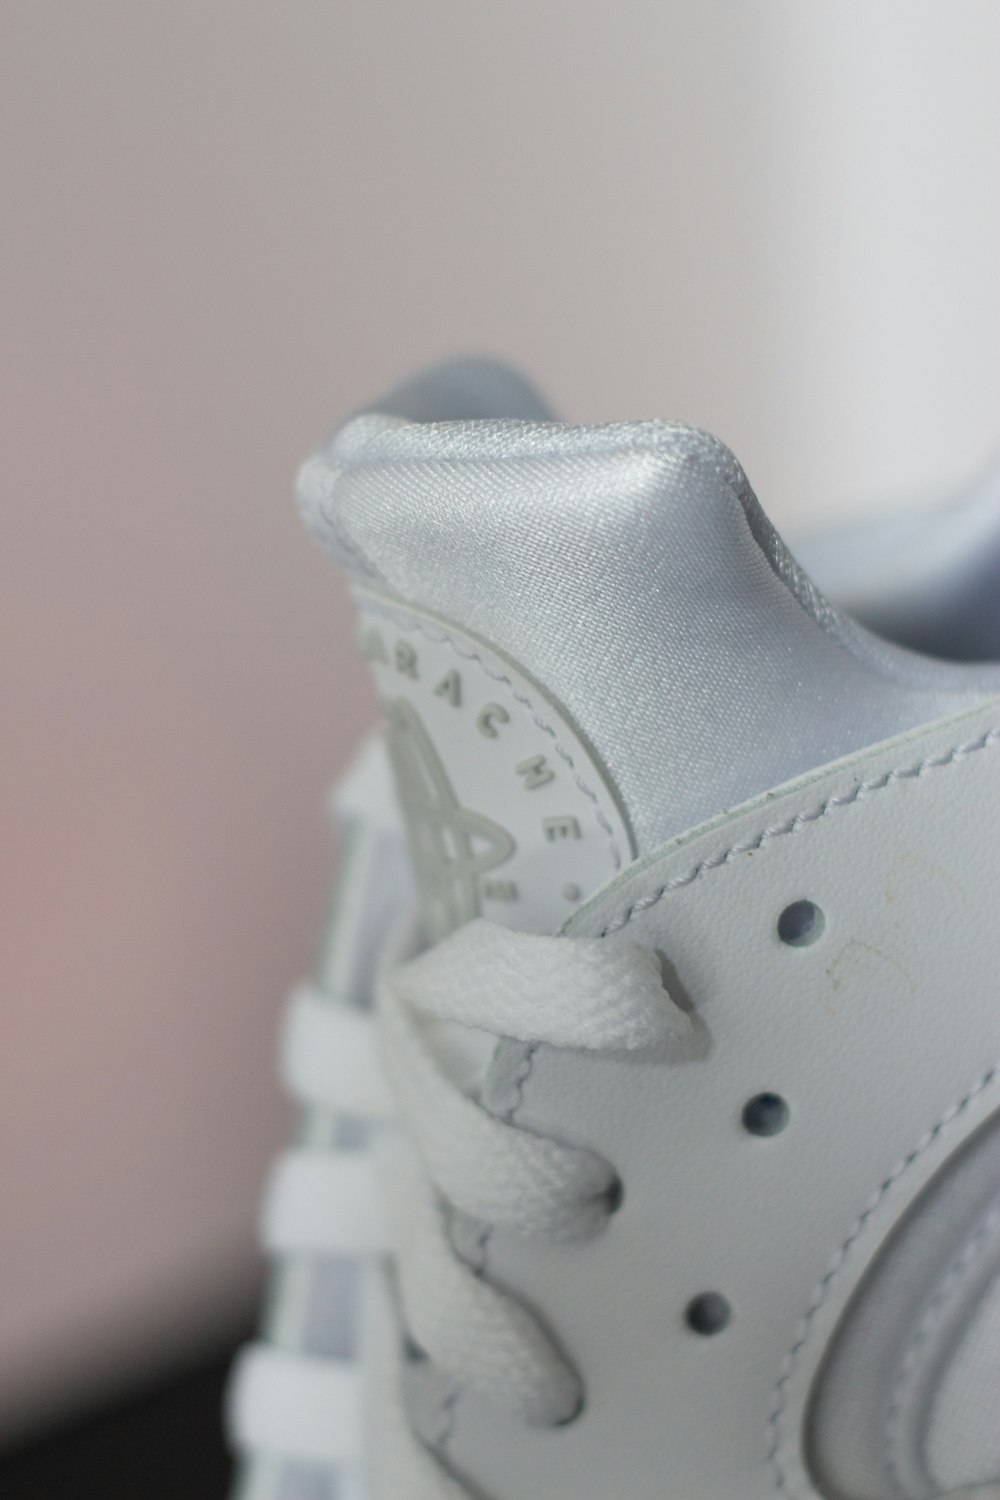 a close up of a white tennis shoe